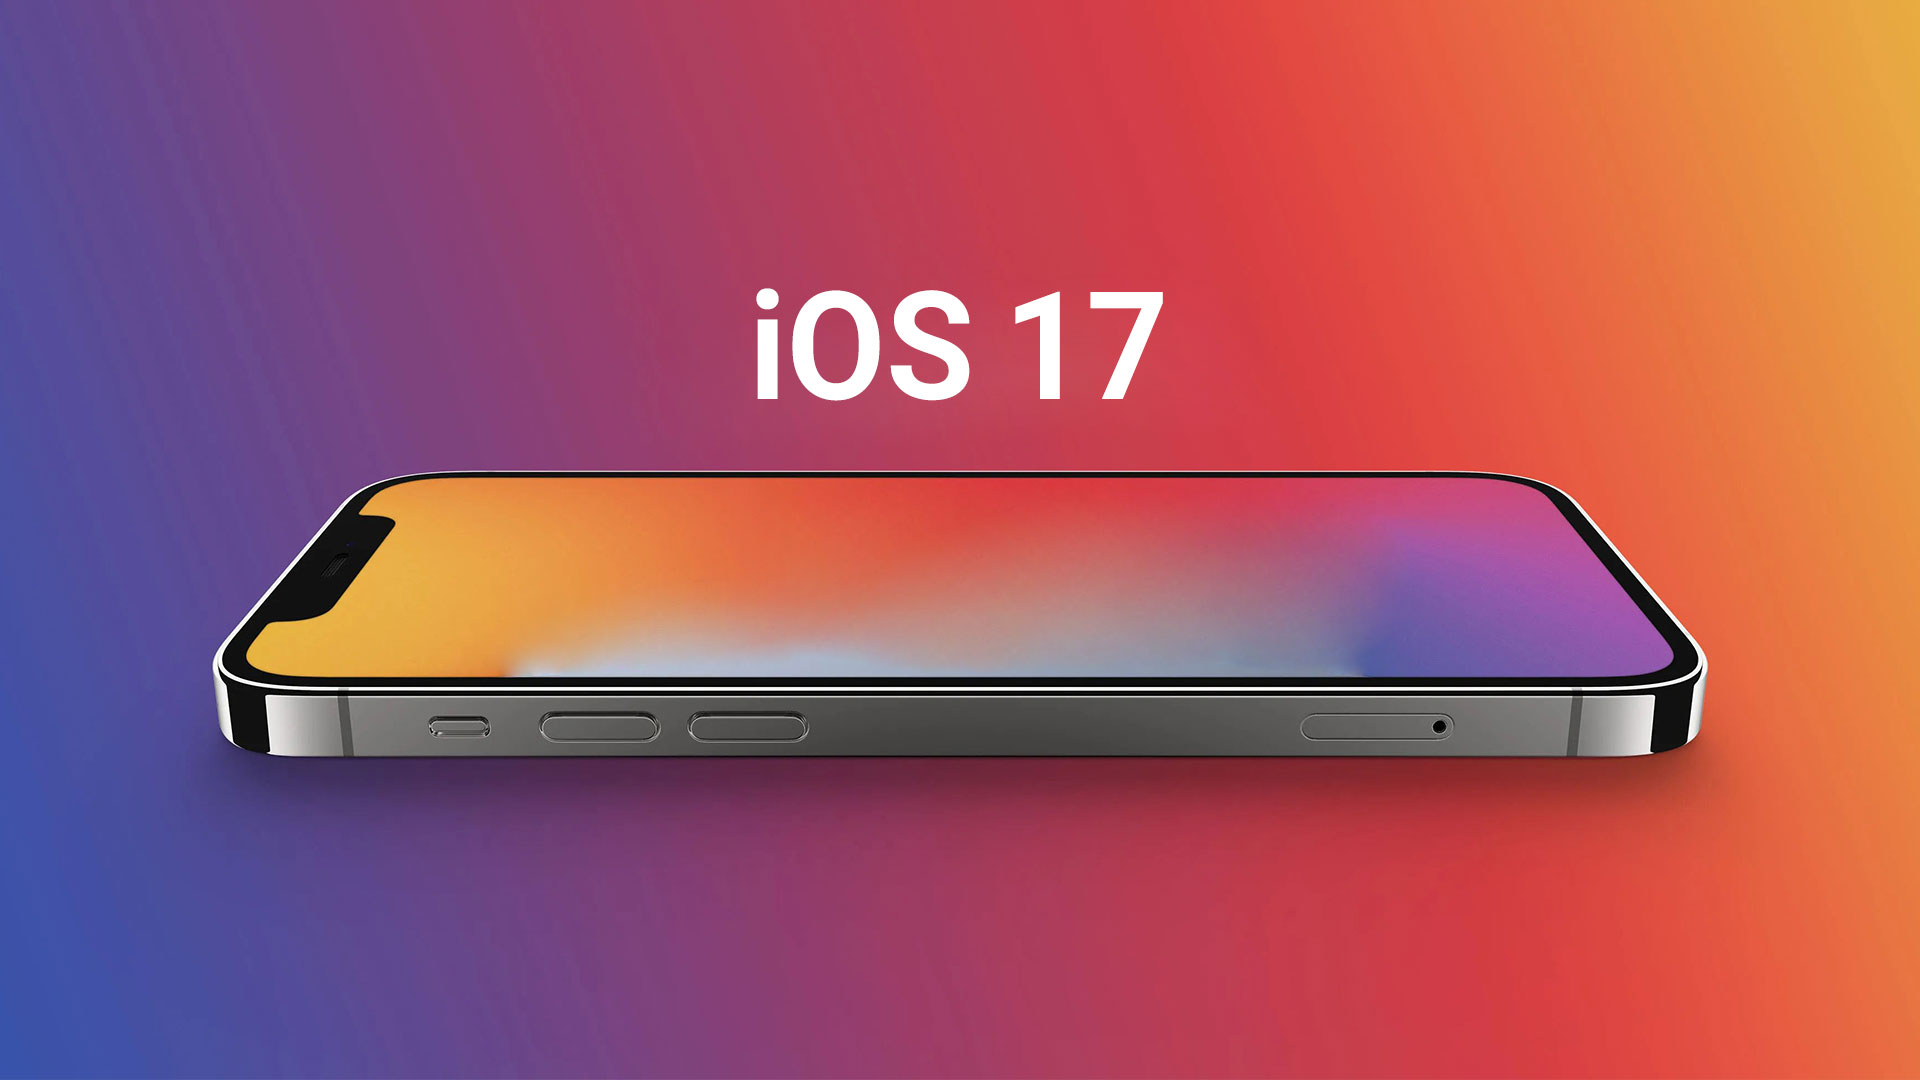 نقطه ضعف iOS 17